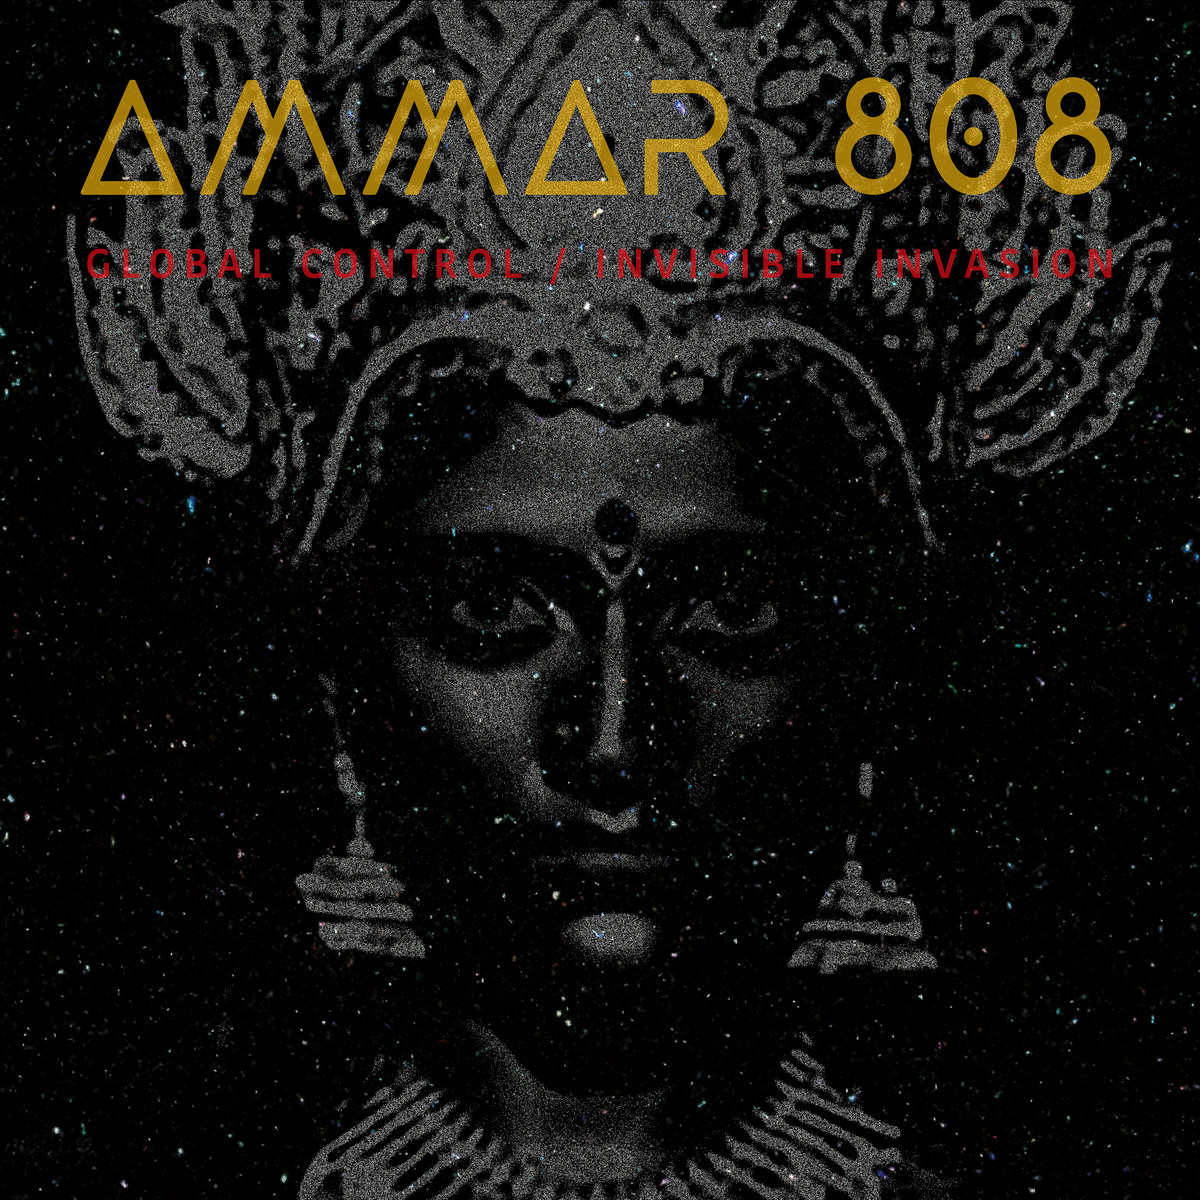 Album Review: Ammar 808 - Global Control/Invisible Invasion